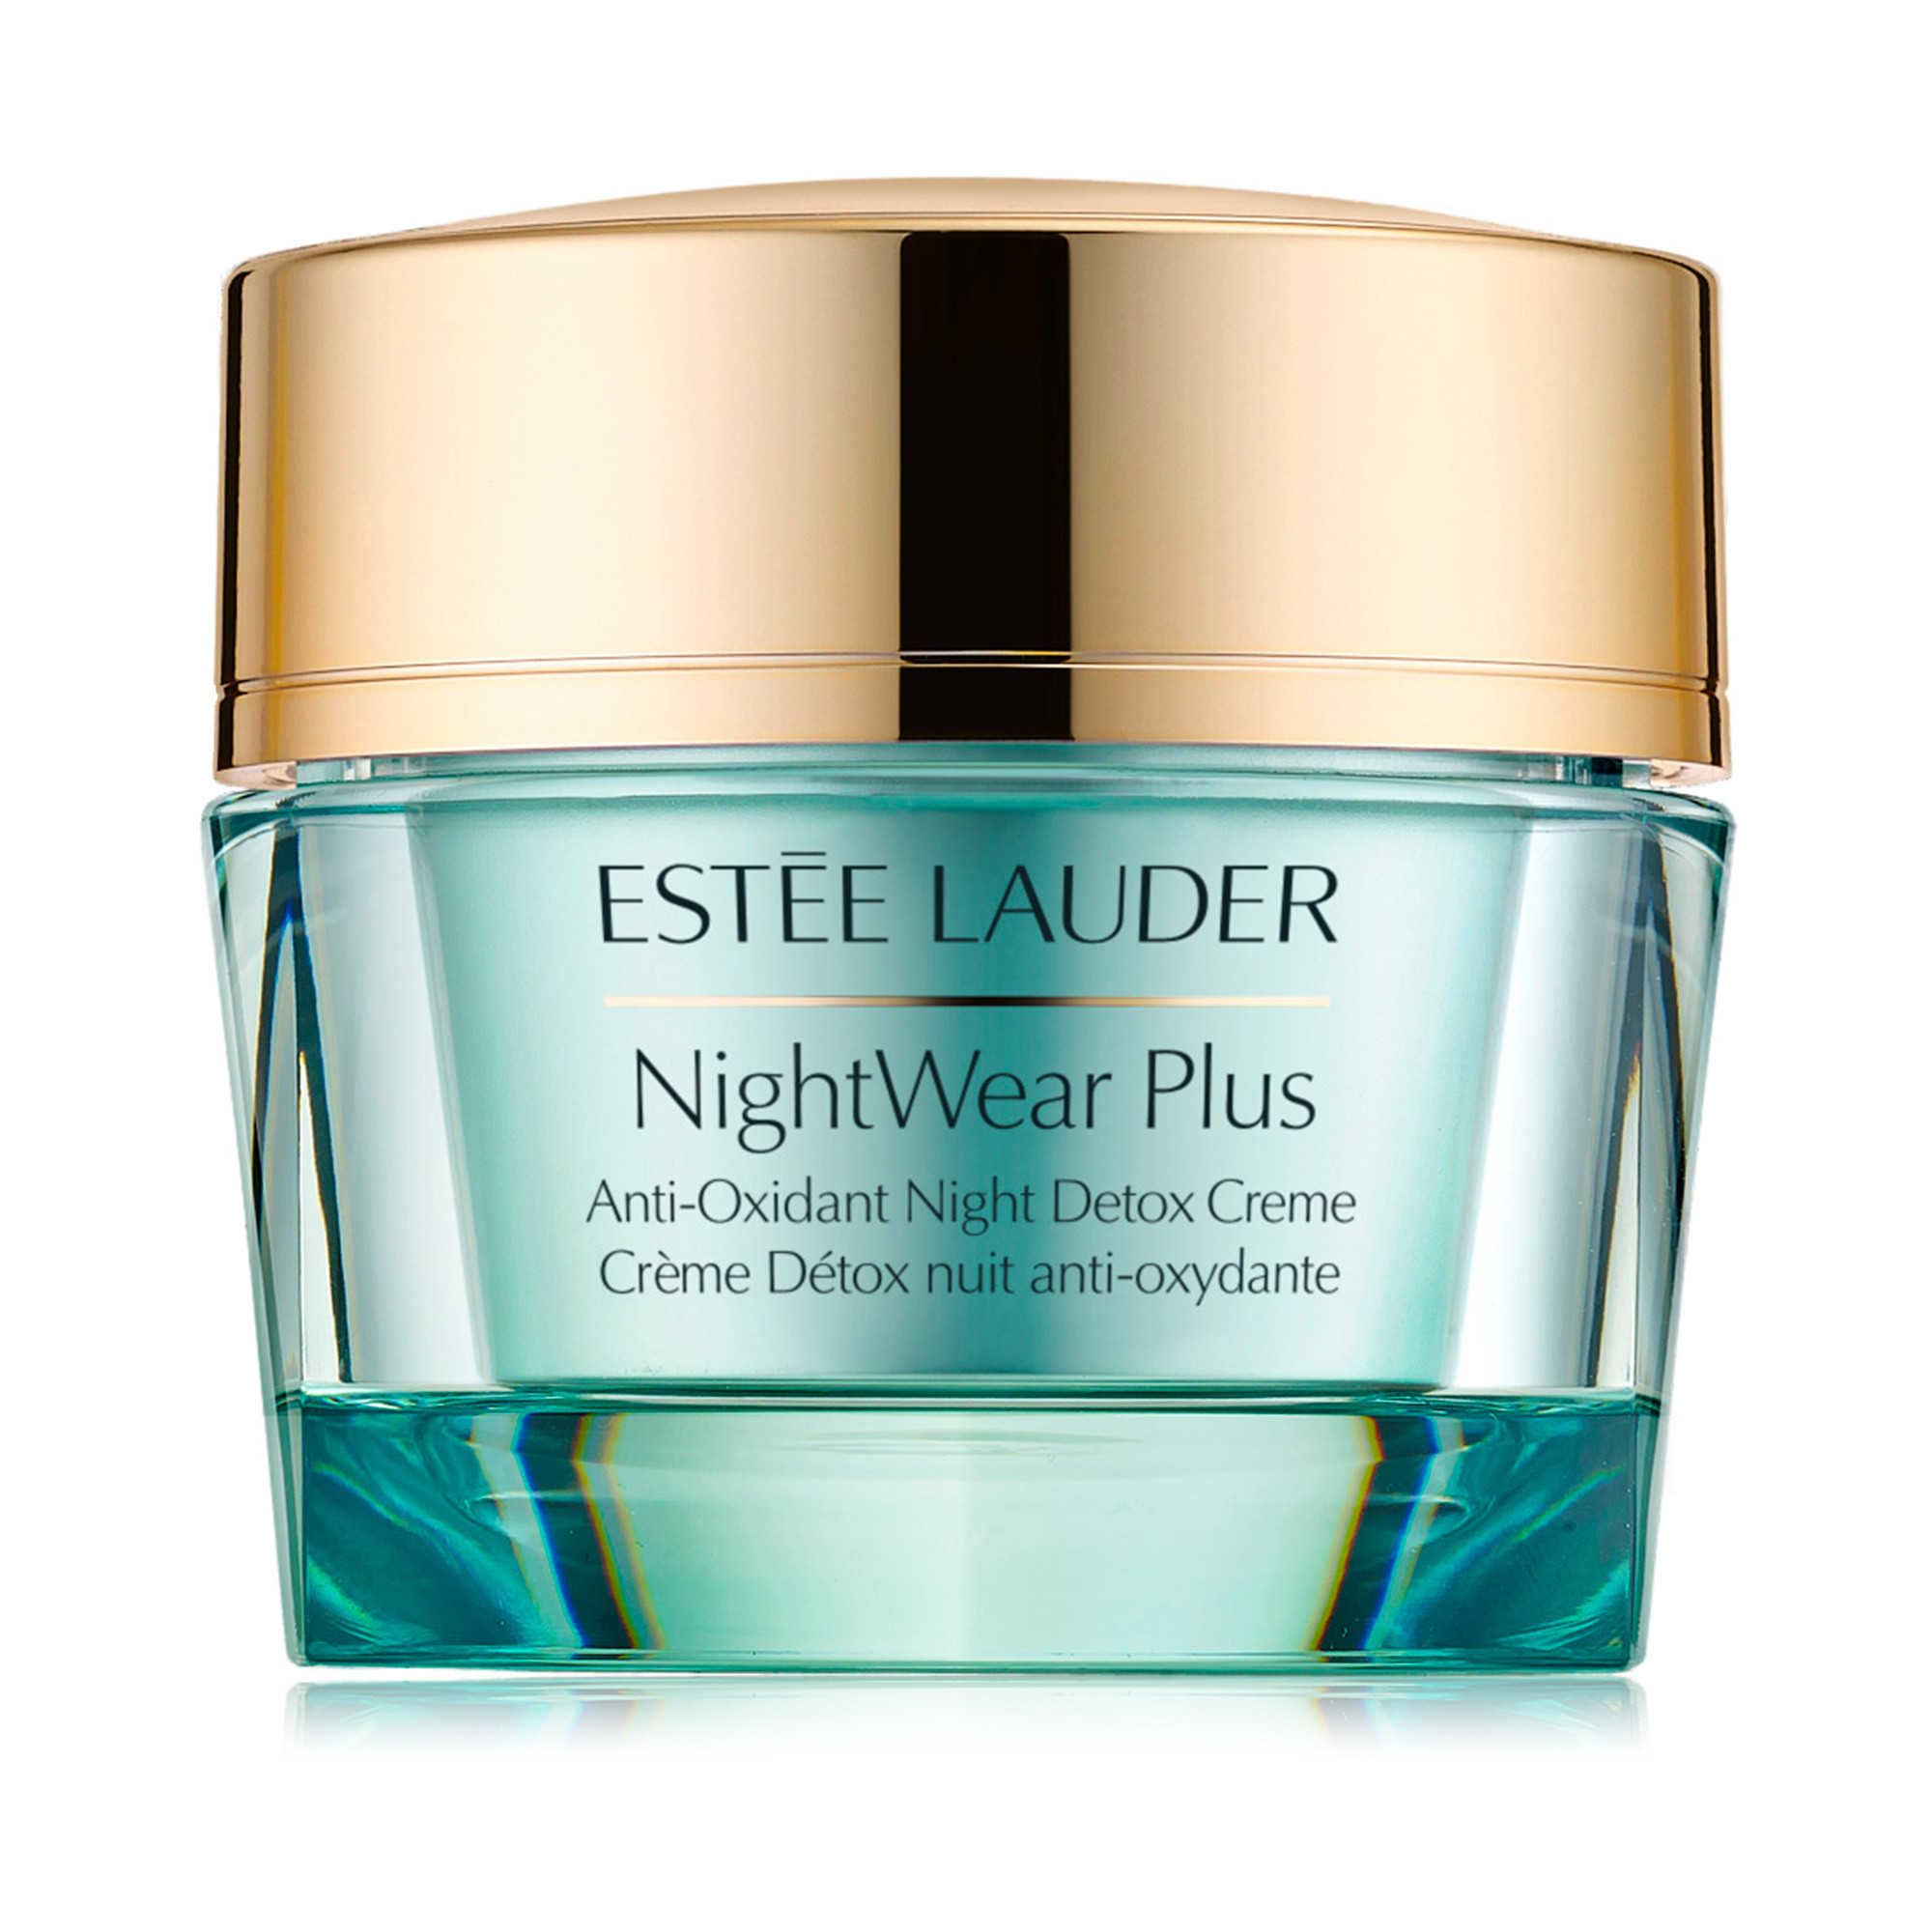 Estée Lauder nightwear night detox creme 50 ml, Azzurro, large image number 0